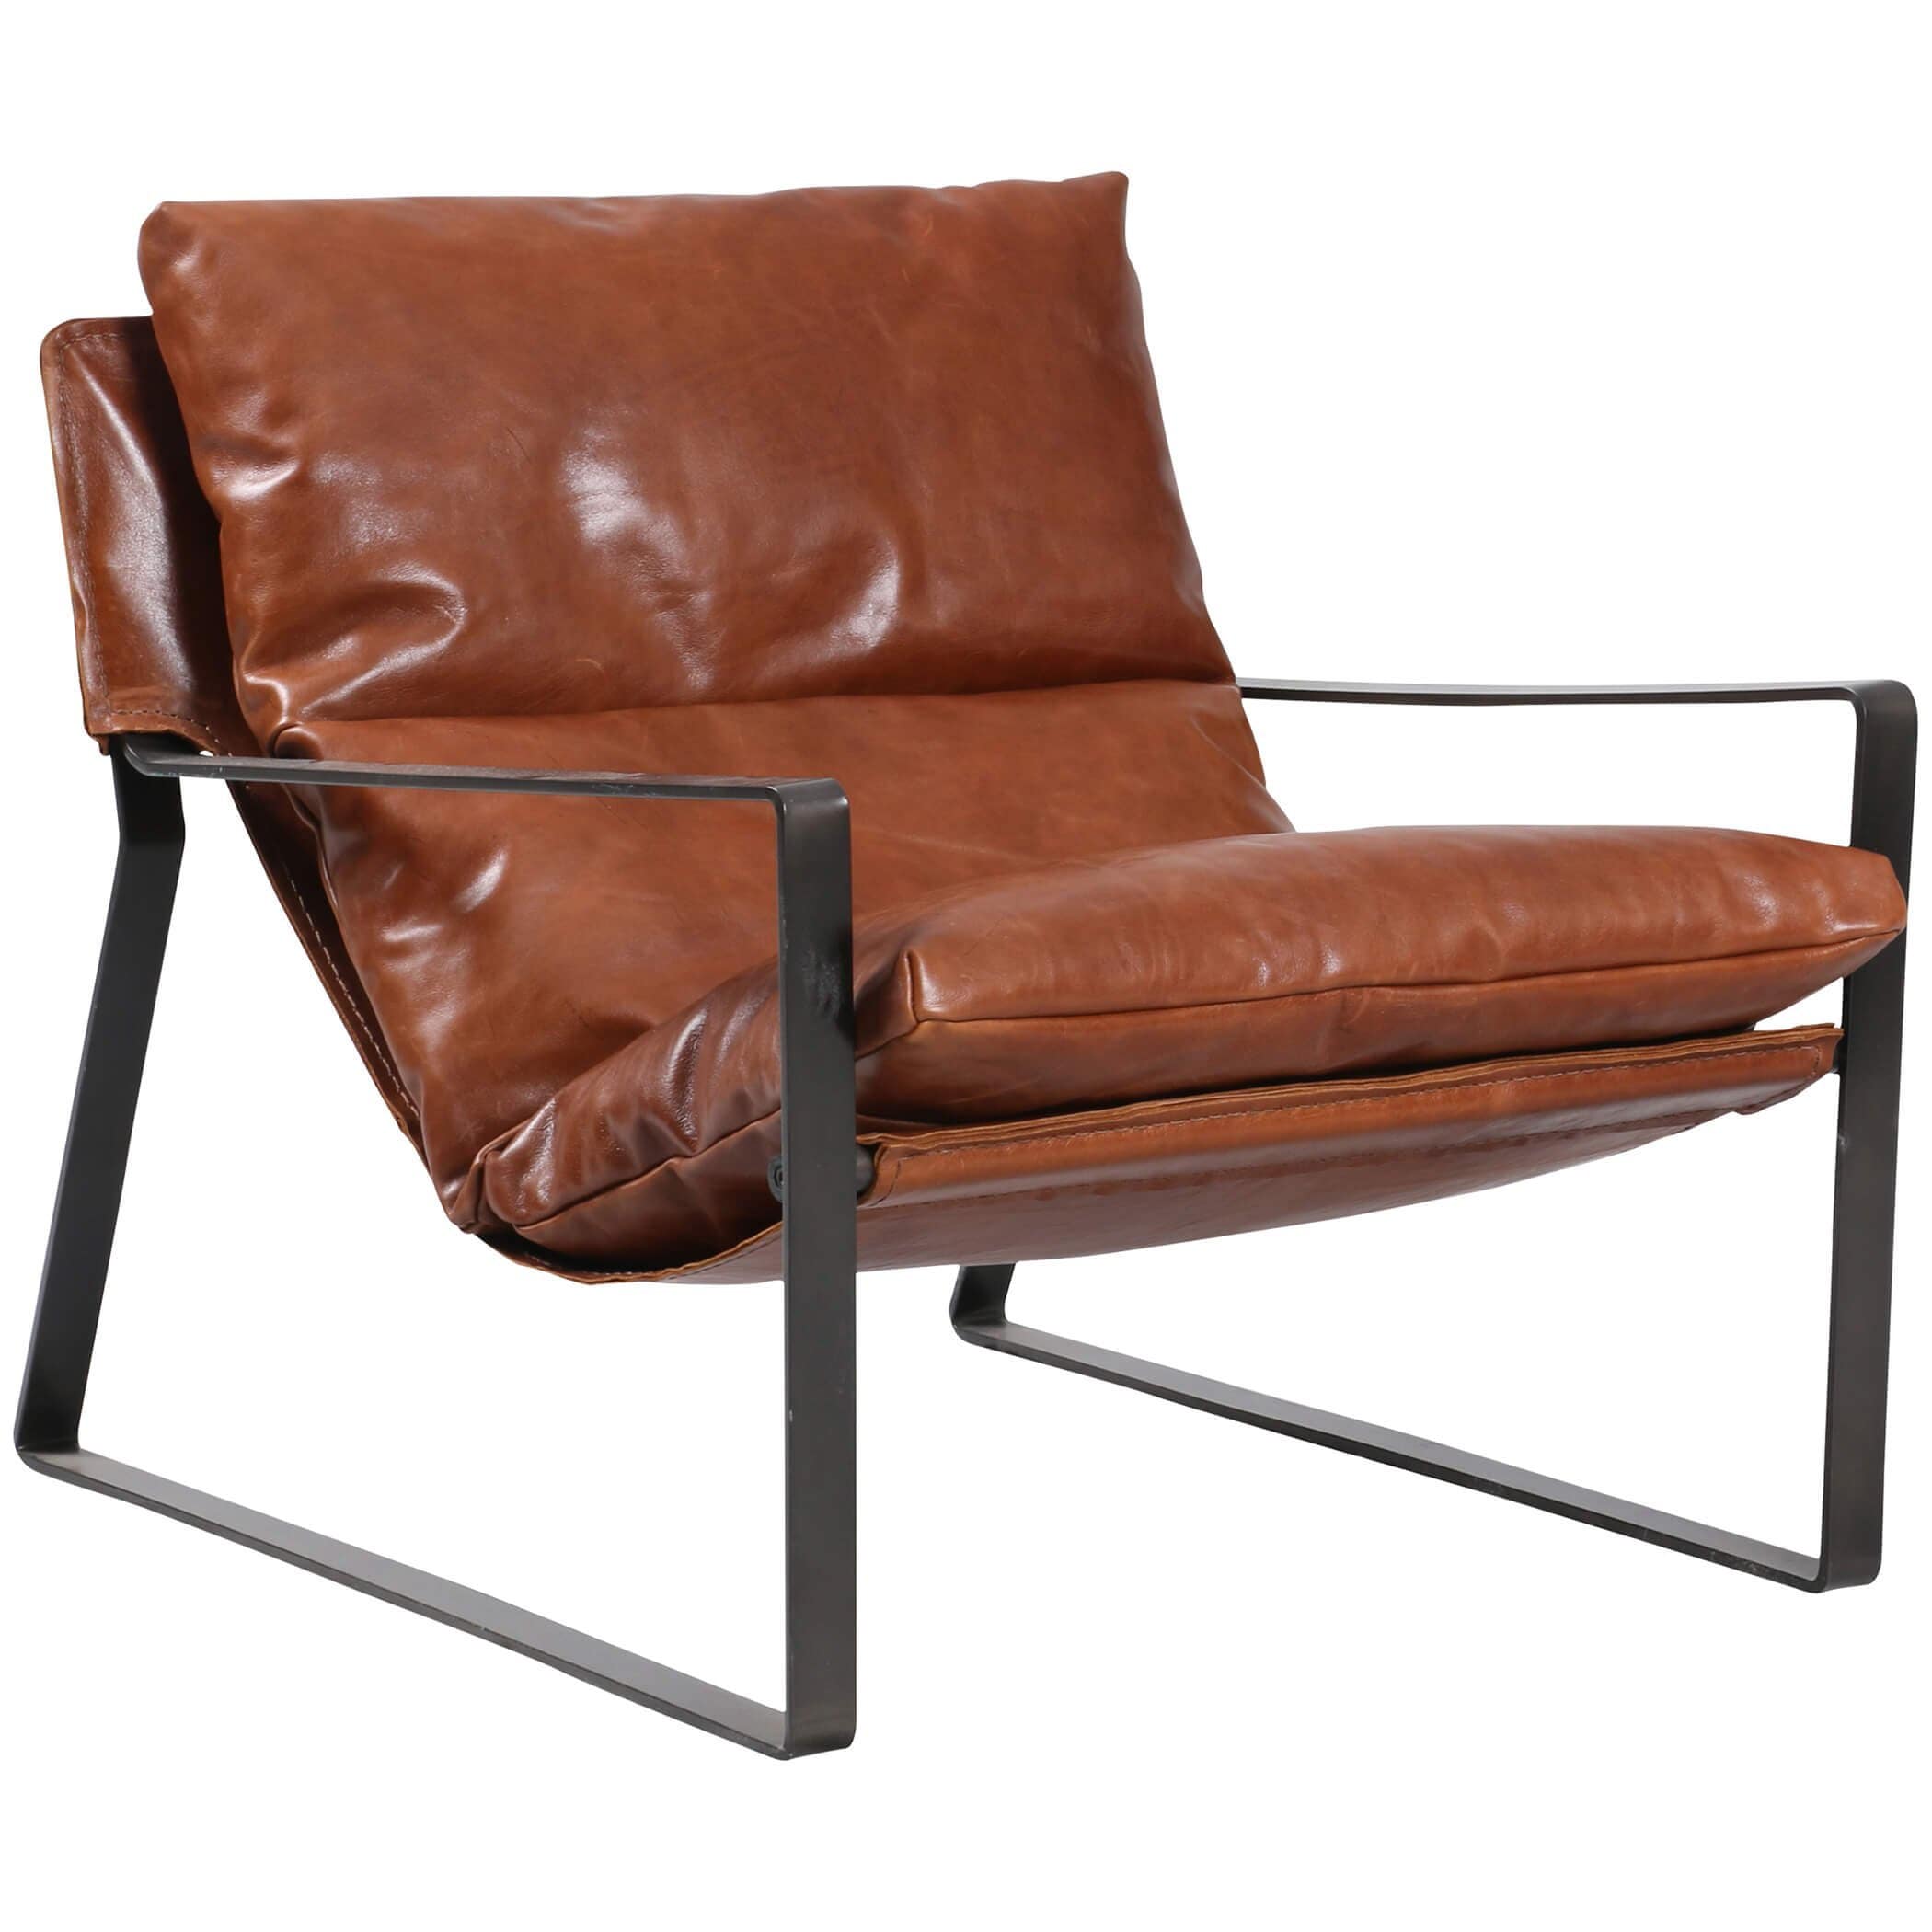 Image of Emmett Leather Sling Chair, Dakota Tobacco